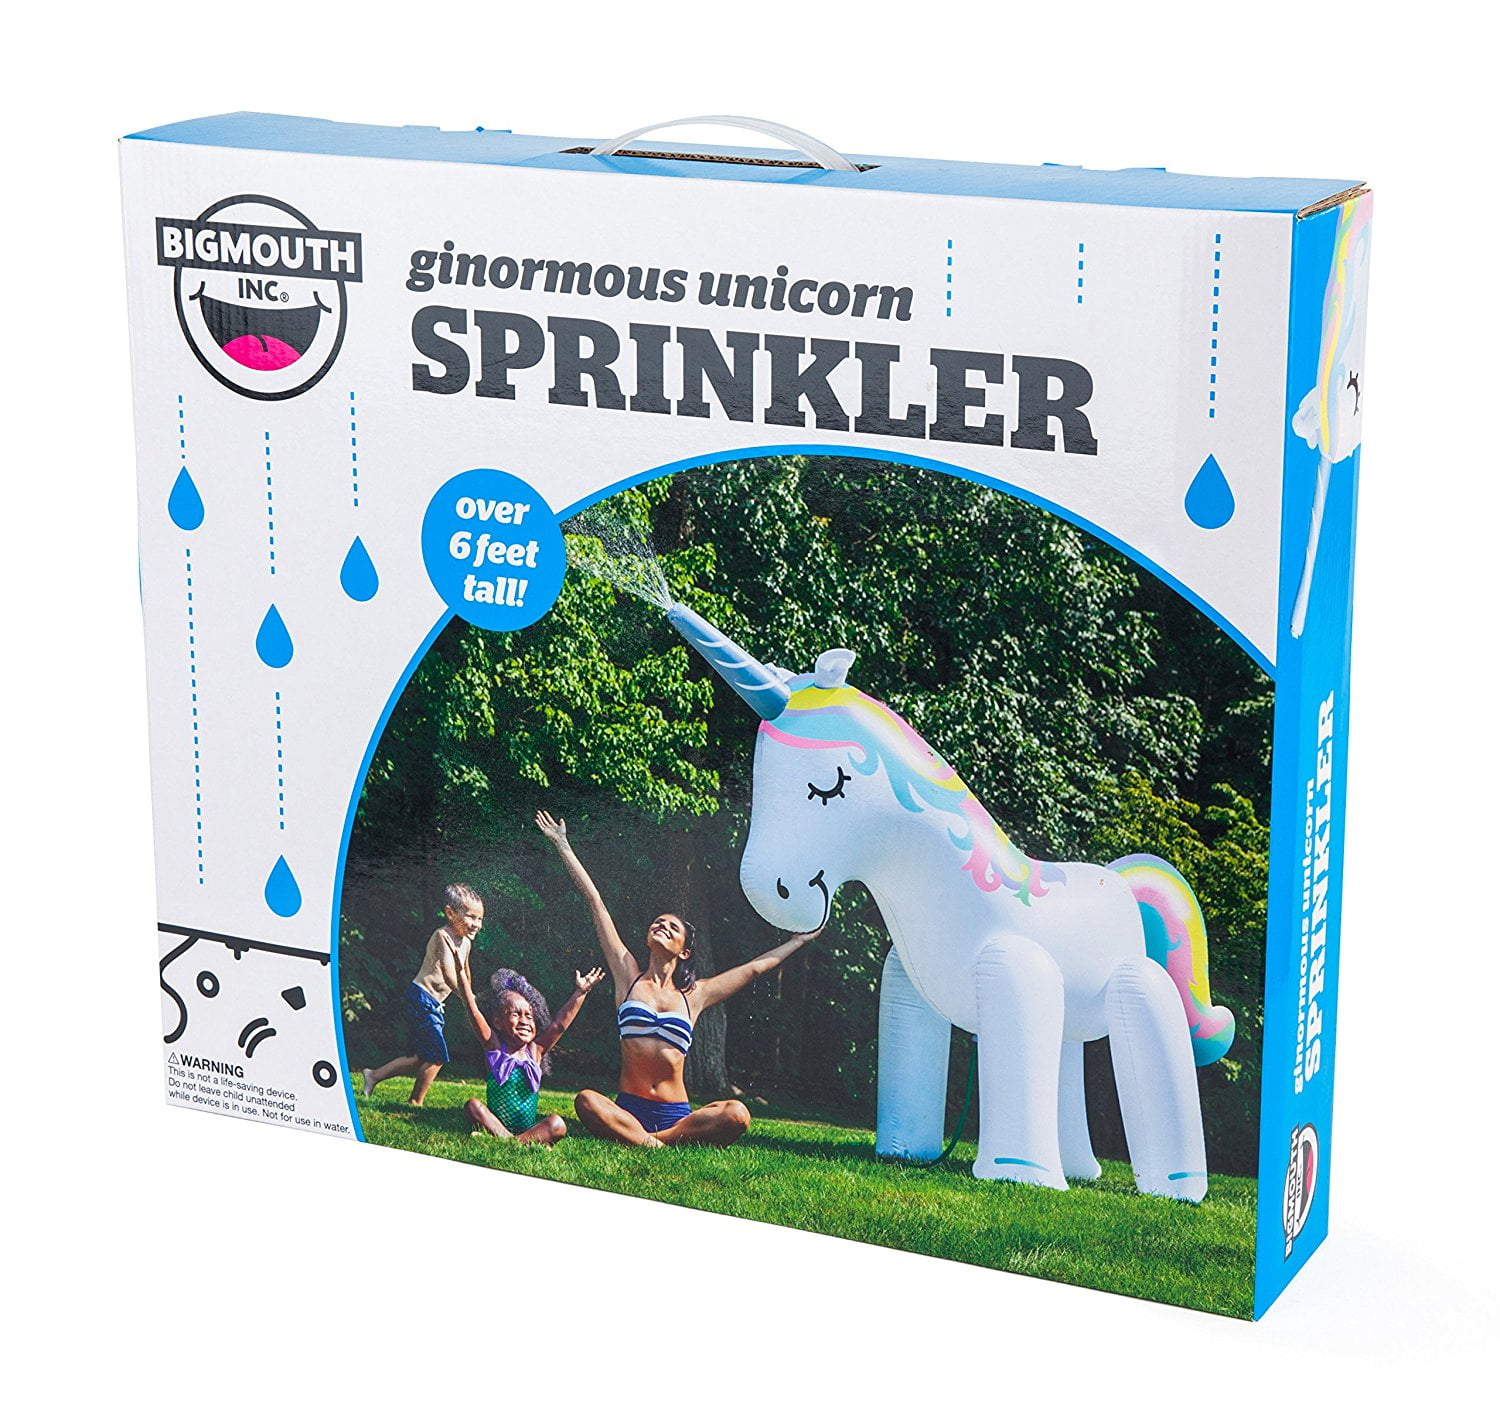 Giant Inflatable Unicorn Sprinkler Garden Fun Kids Toy Water Sprayer 6ft Tall Mi 